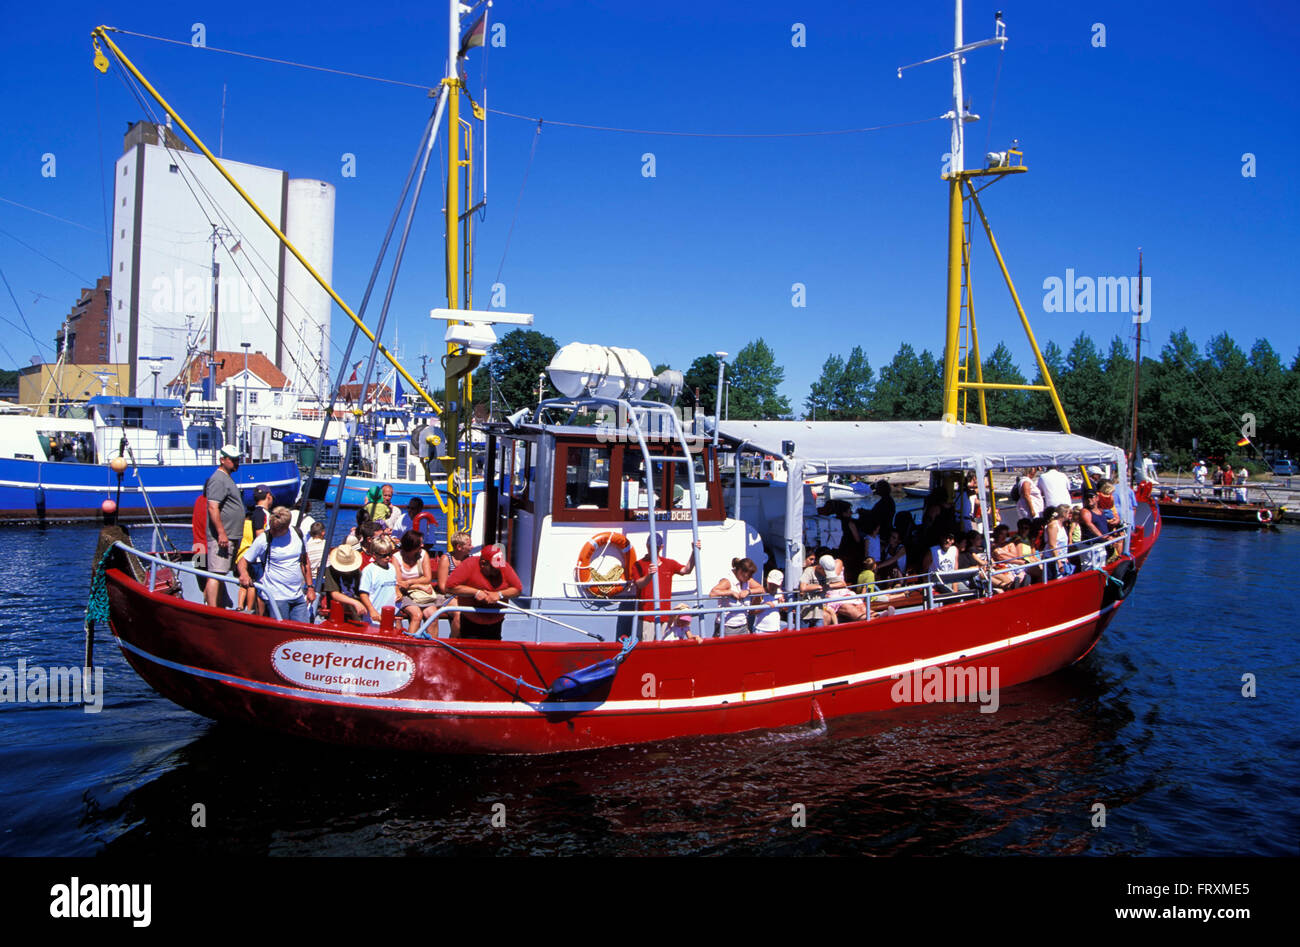 Touris cruise ship SEEPFERDCHEN, Burgstaaken harbour, Fehmarn island, Baltic Sea, Schleswig-Holstein, Germany, Europe Stock Photo